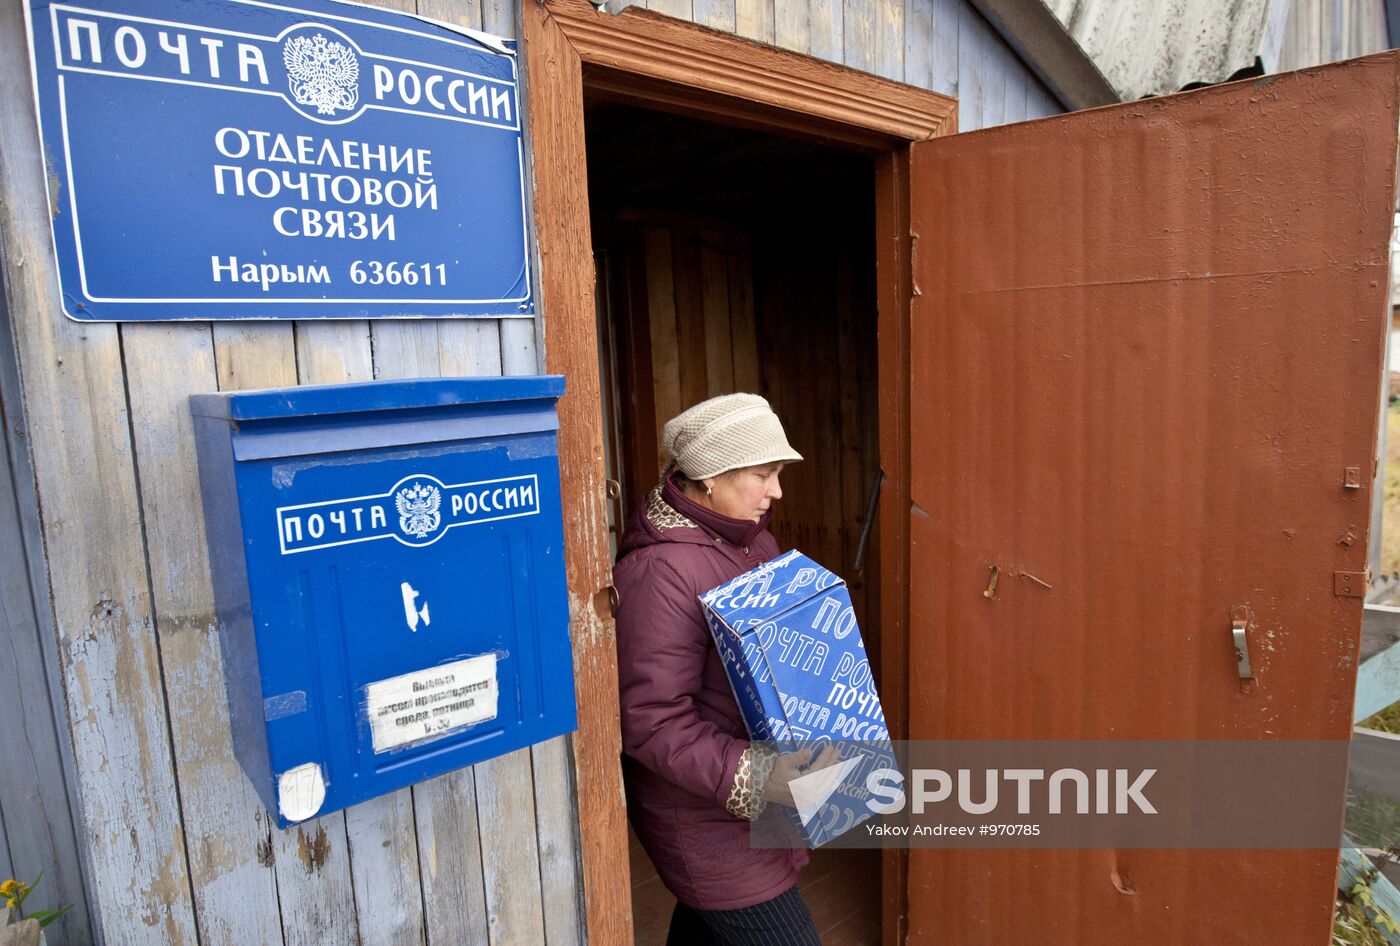 Post office in village of Narym in Tomsk Region